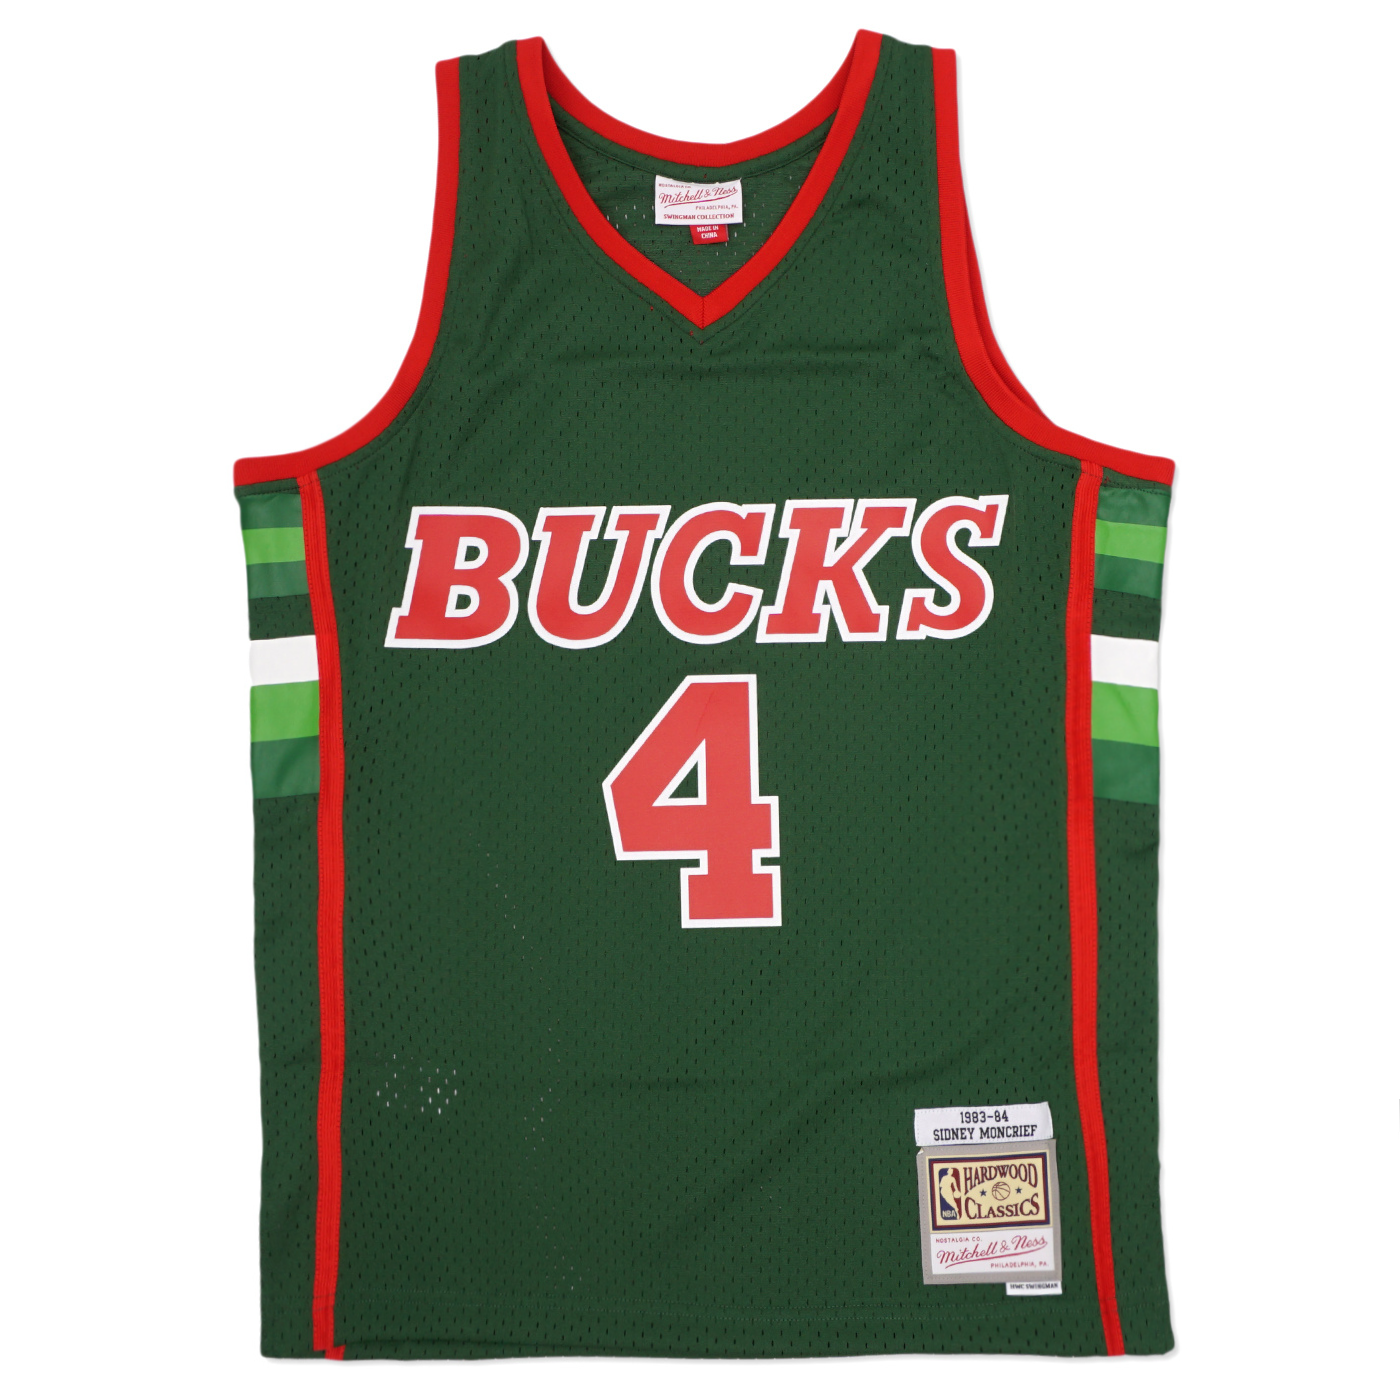 Authentic Milwaukee Bucks Jerseys at MODA3 - Free Shipping $100+